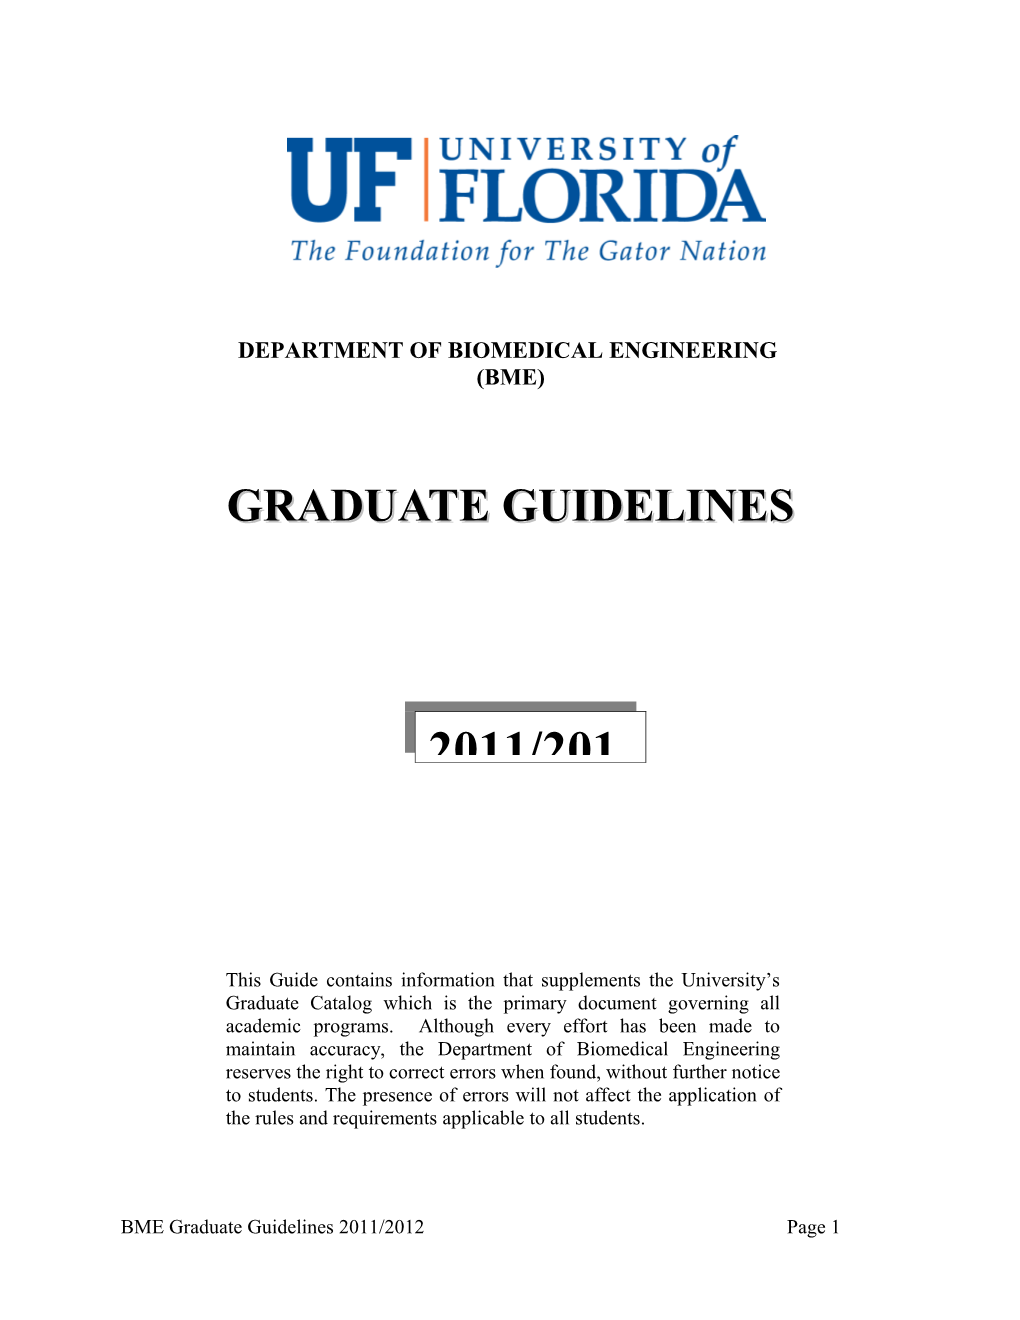 BME Graduate Guidelines